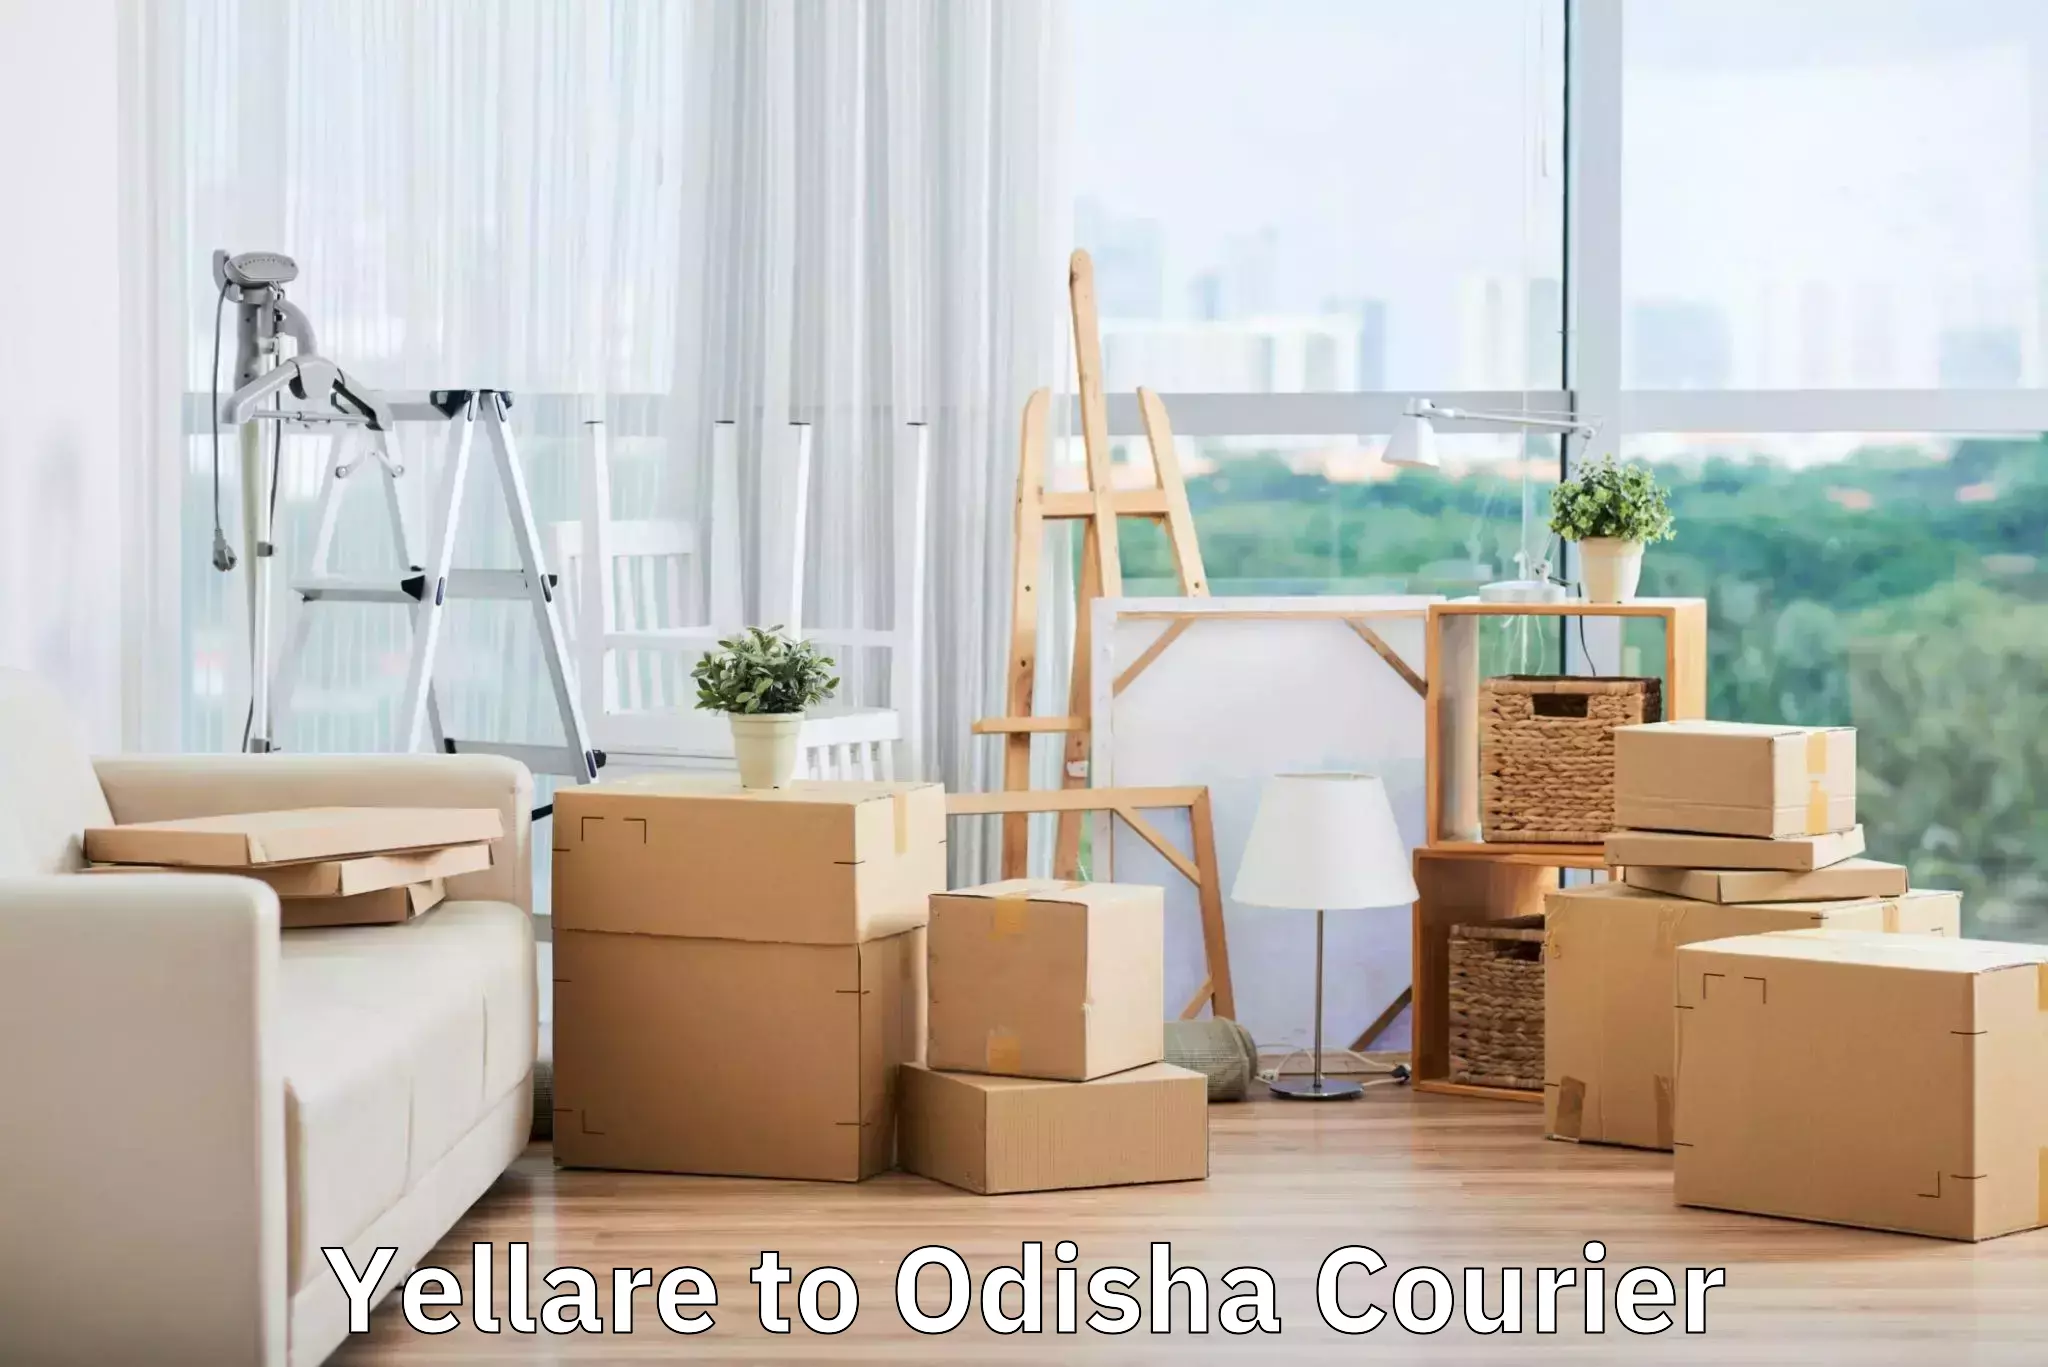 Suburban luggage delivery in Yellare to Odisha